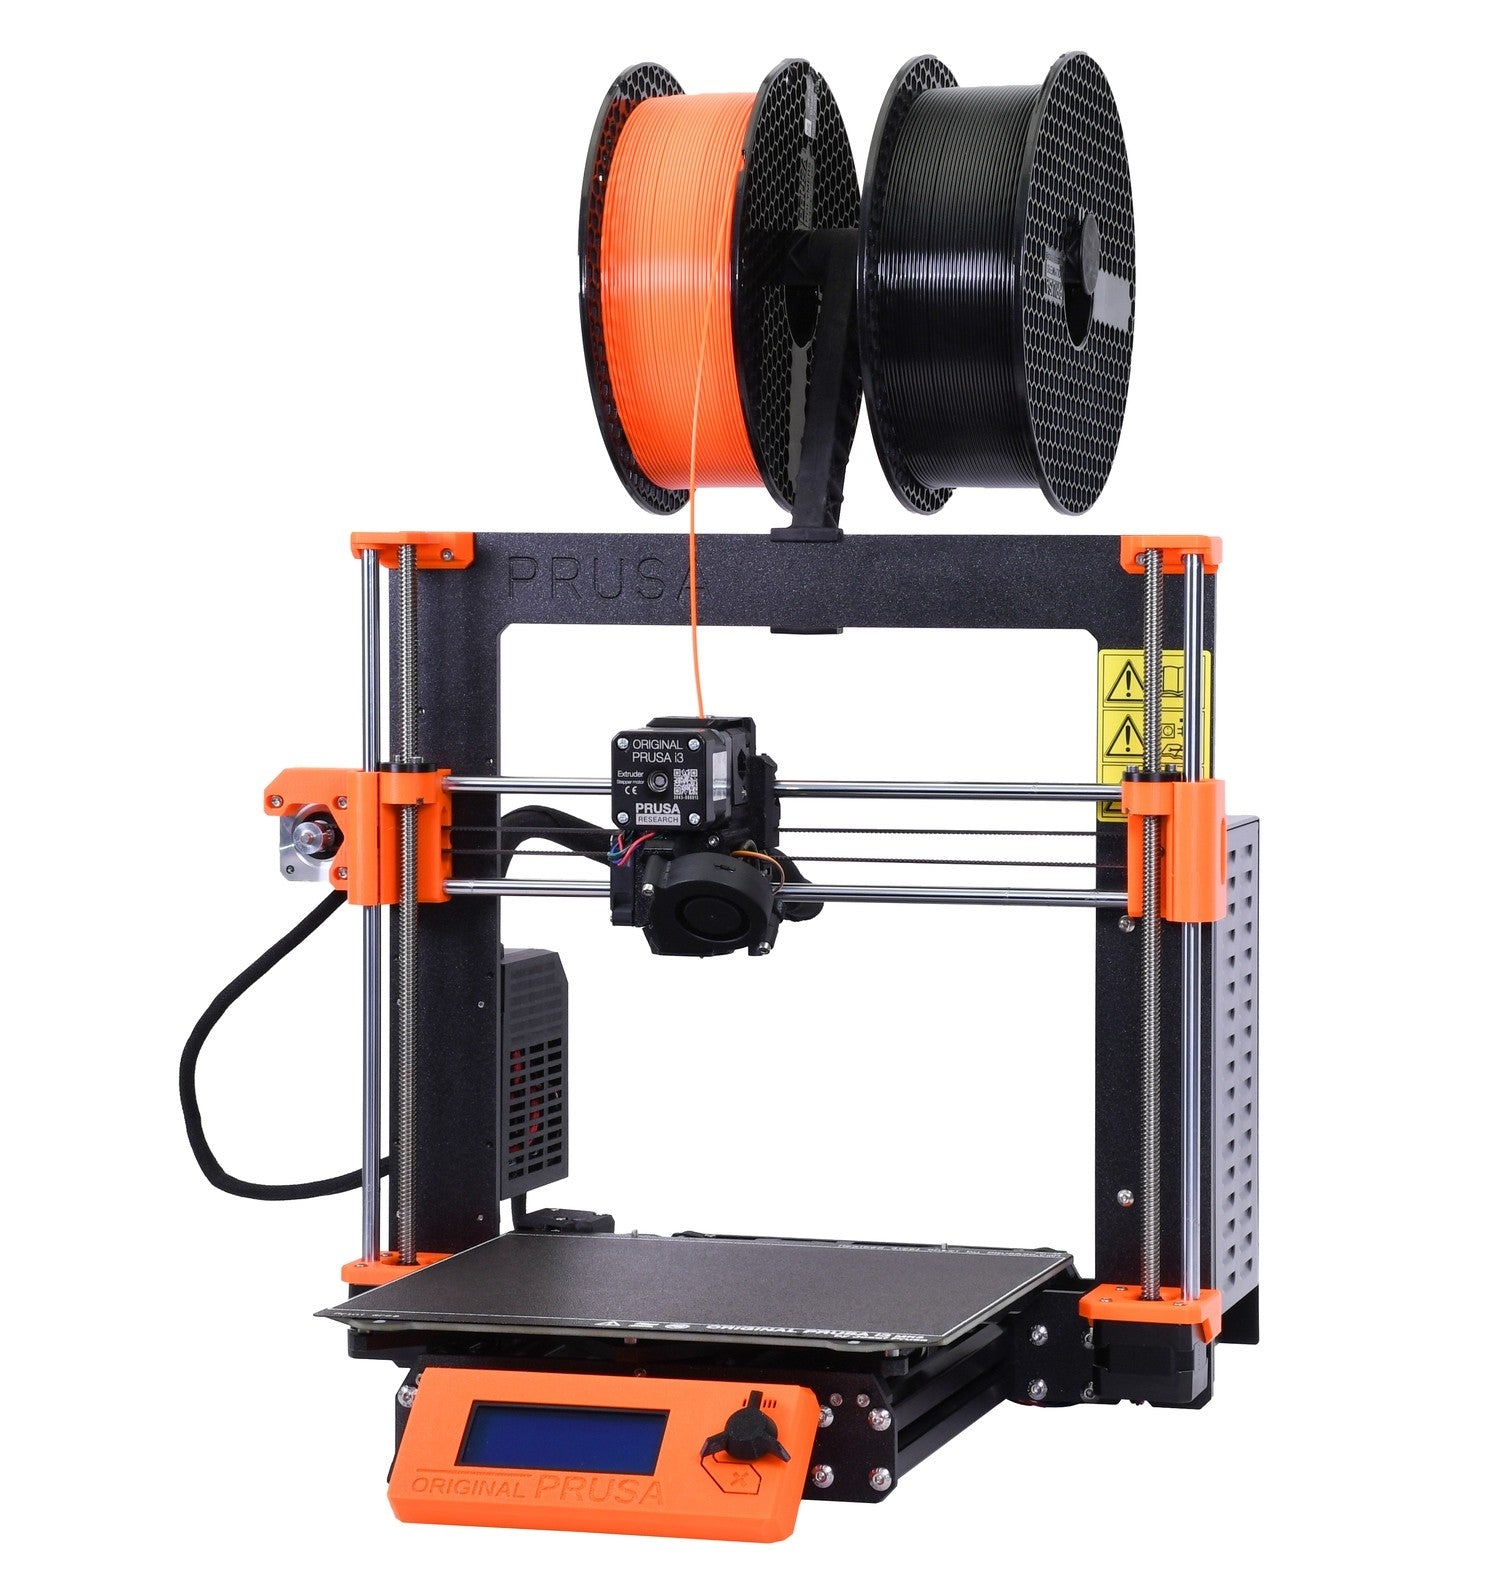 Imprimanta 3D Prusa I3 MK3S+